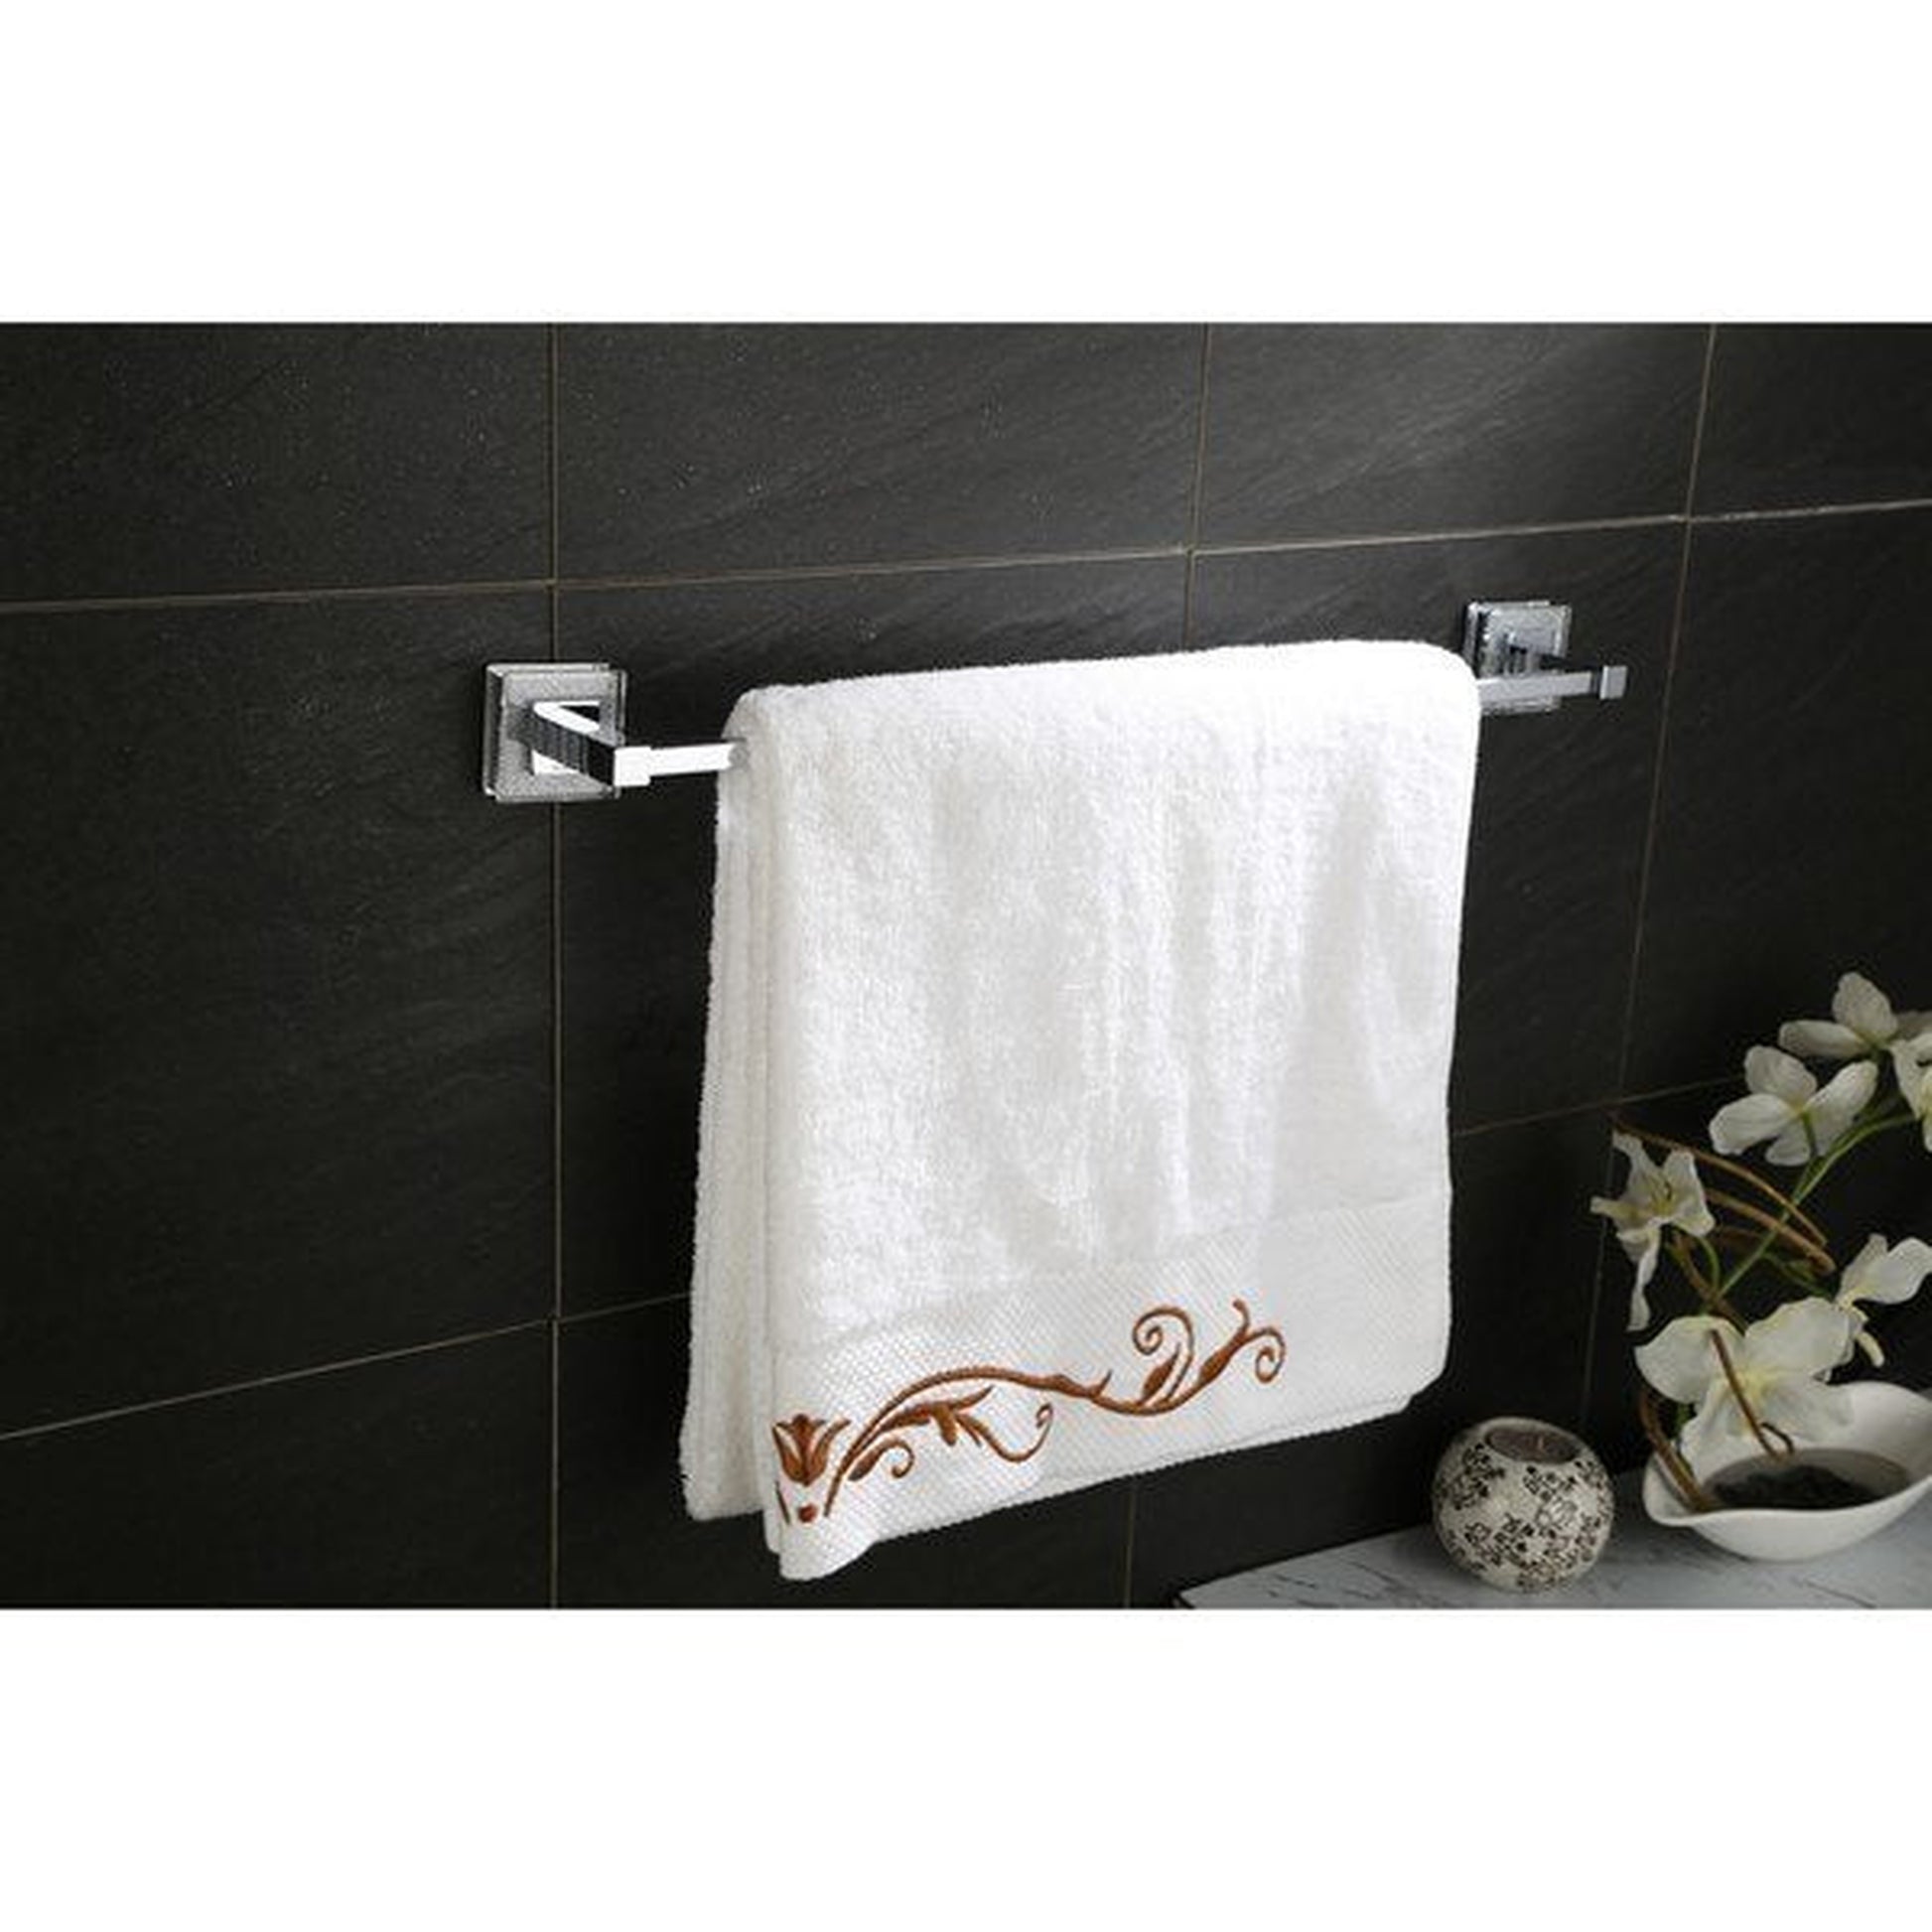 Ruvati Valencia 24" Crystal and Chrome Towel Bar Bathroom Accessory